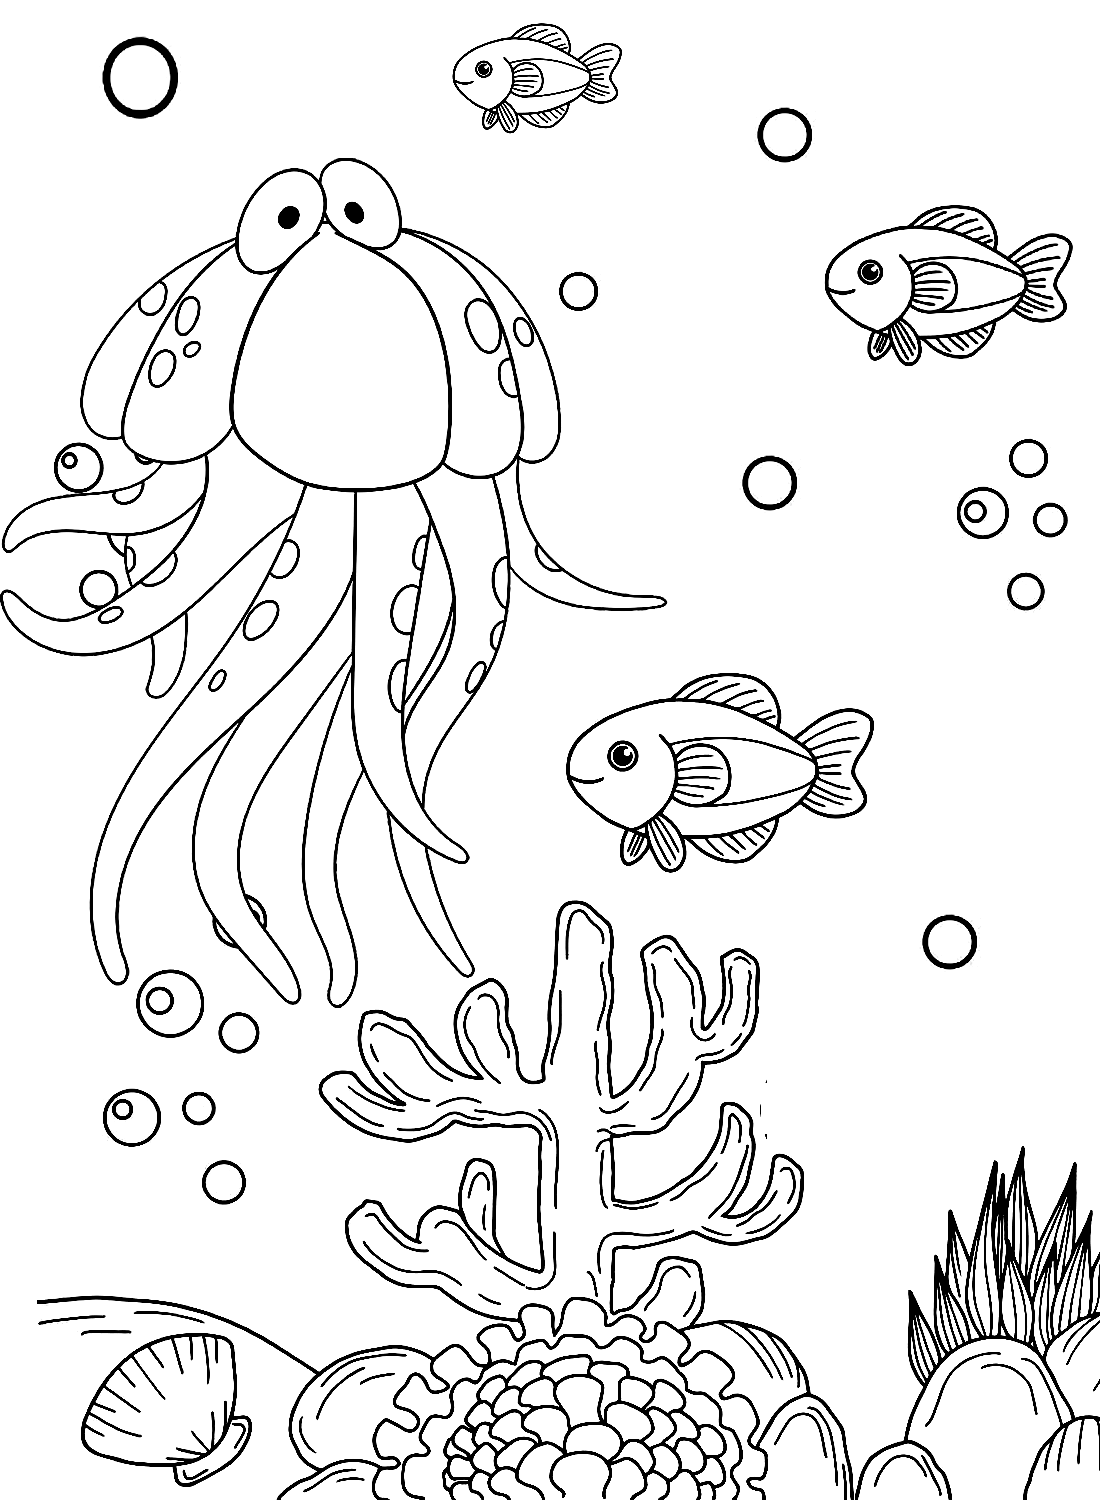 Jellyfish from Jellyfish